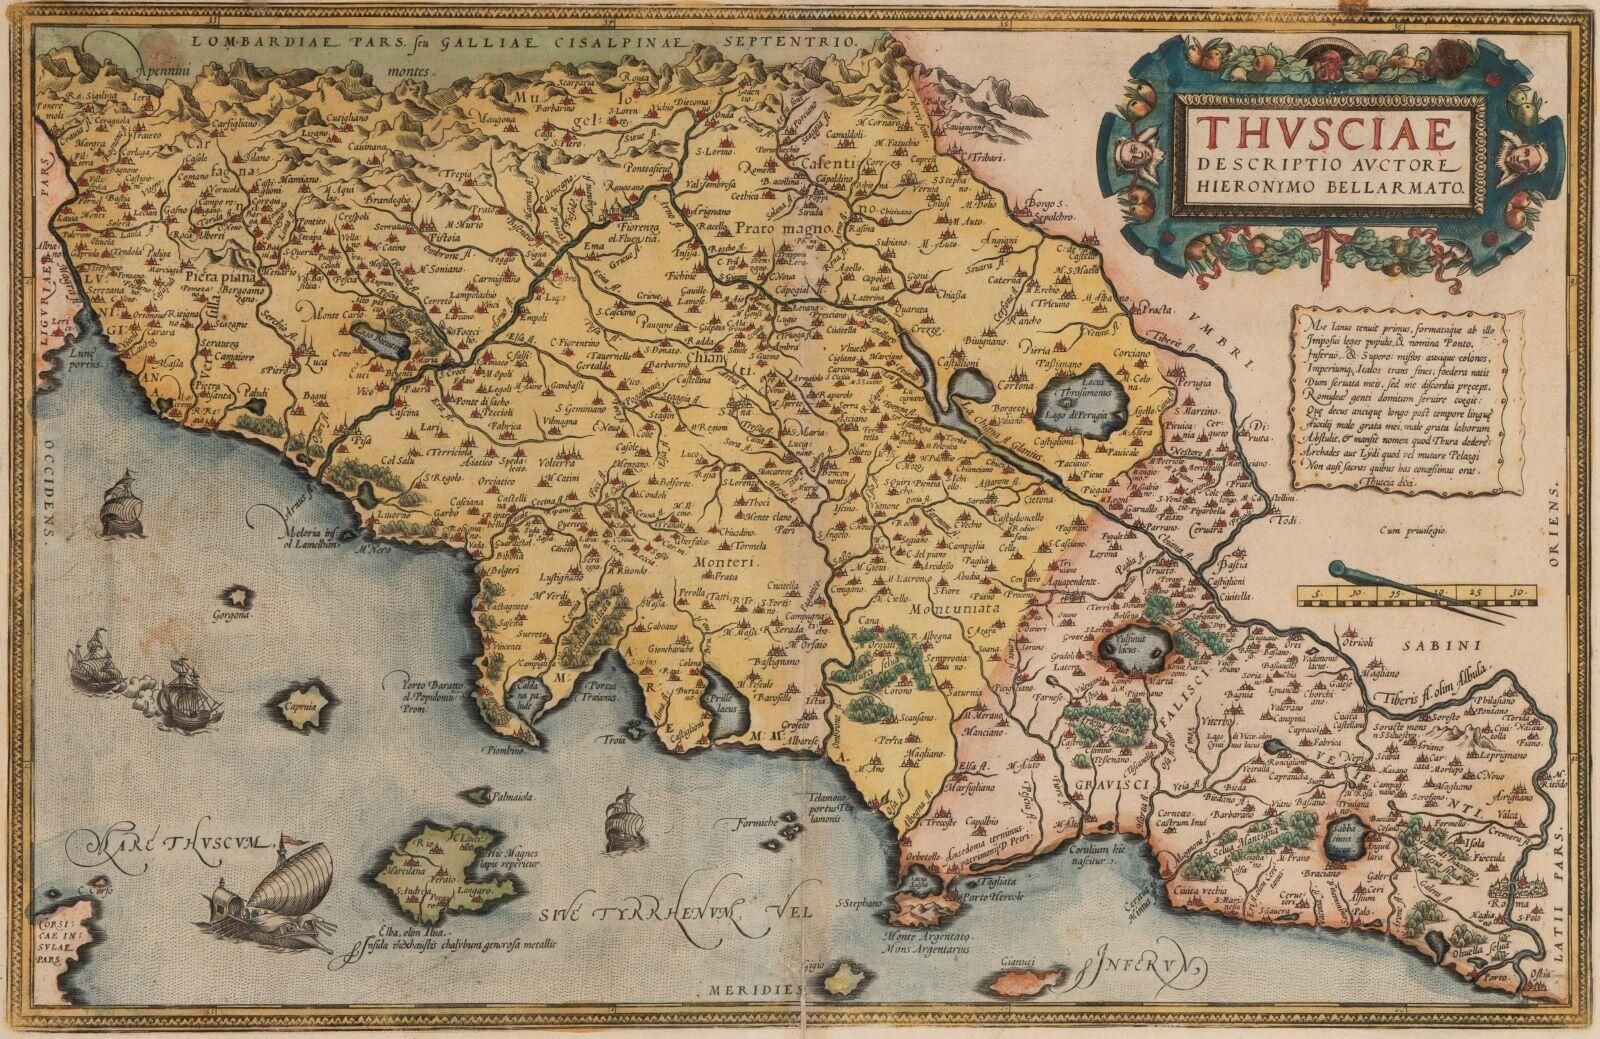 Cartes de provinces italiennes extraites de l'atlas Theatrum Orbis Terrarum (titre factice)